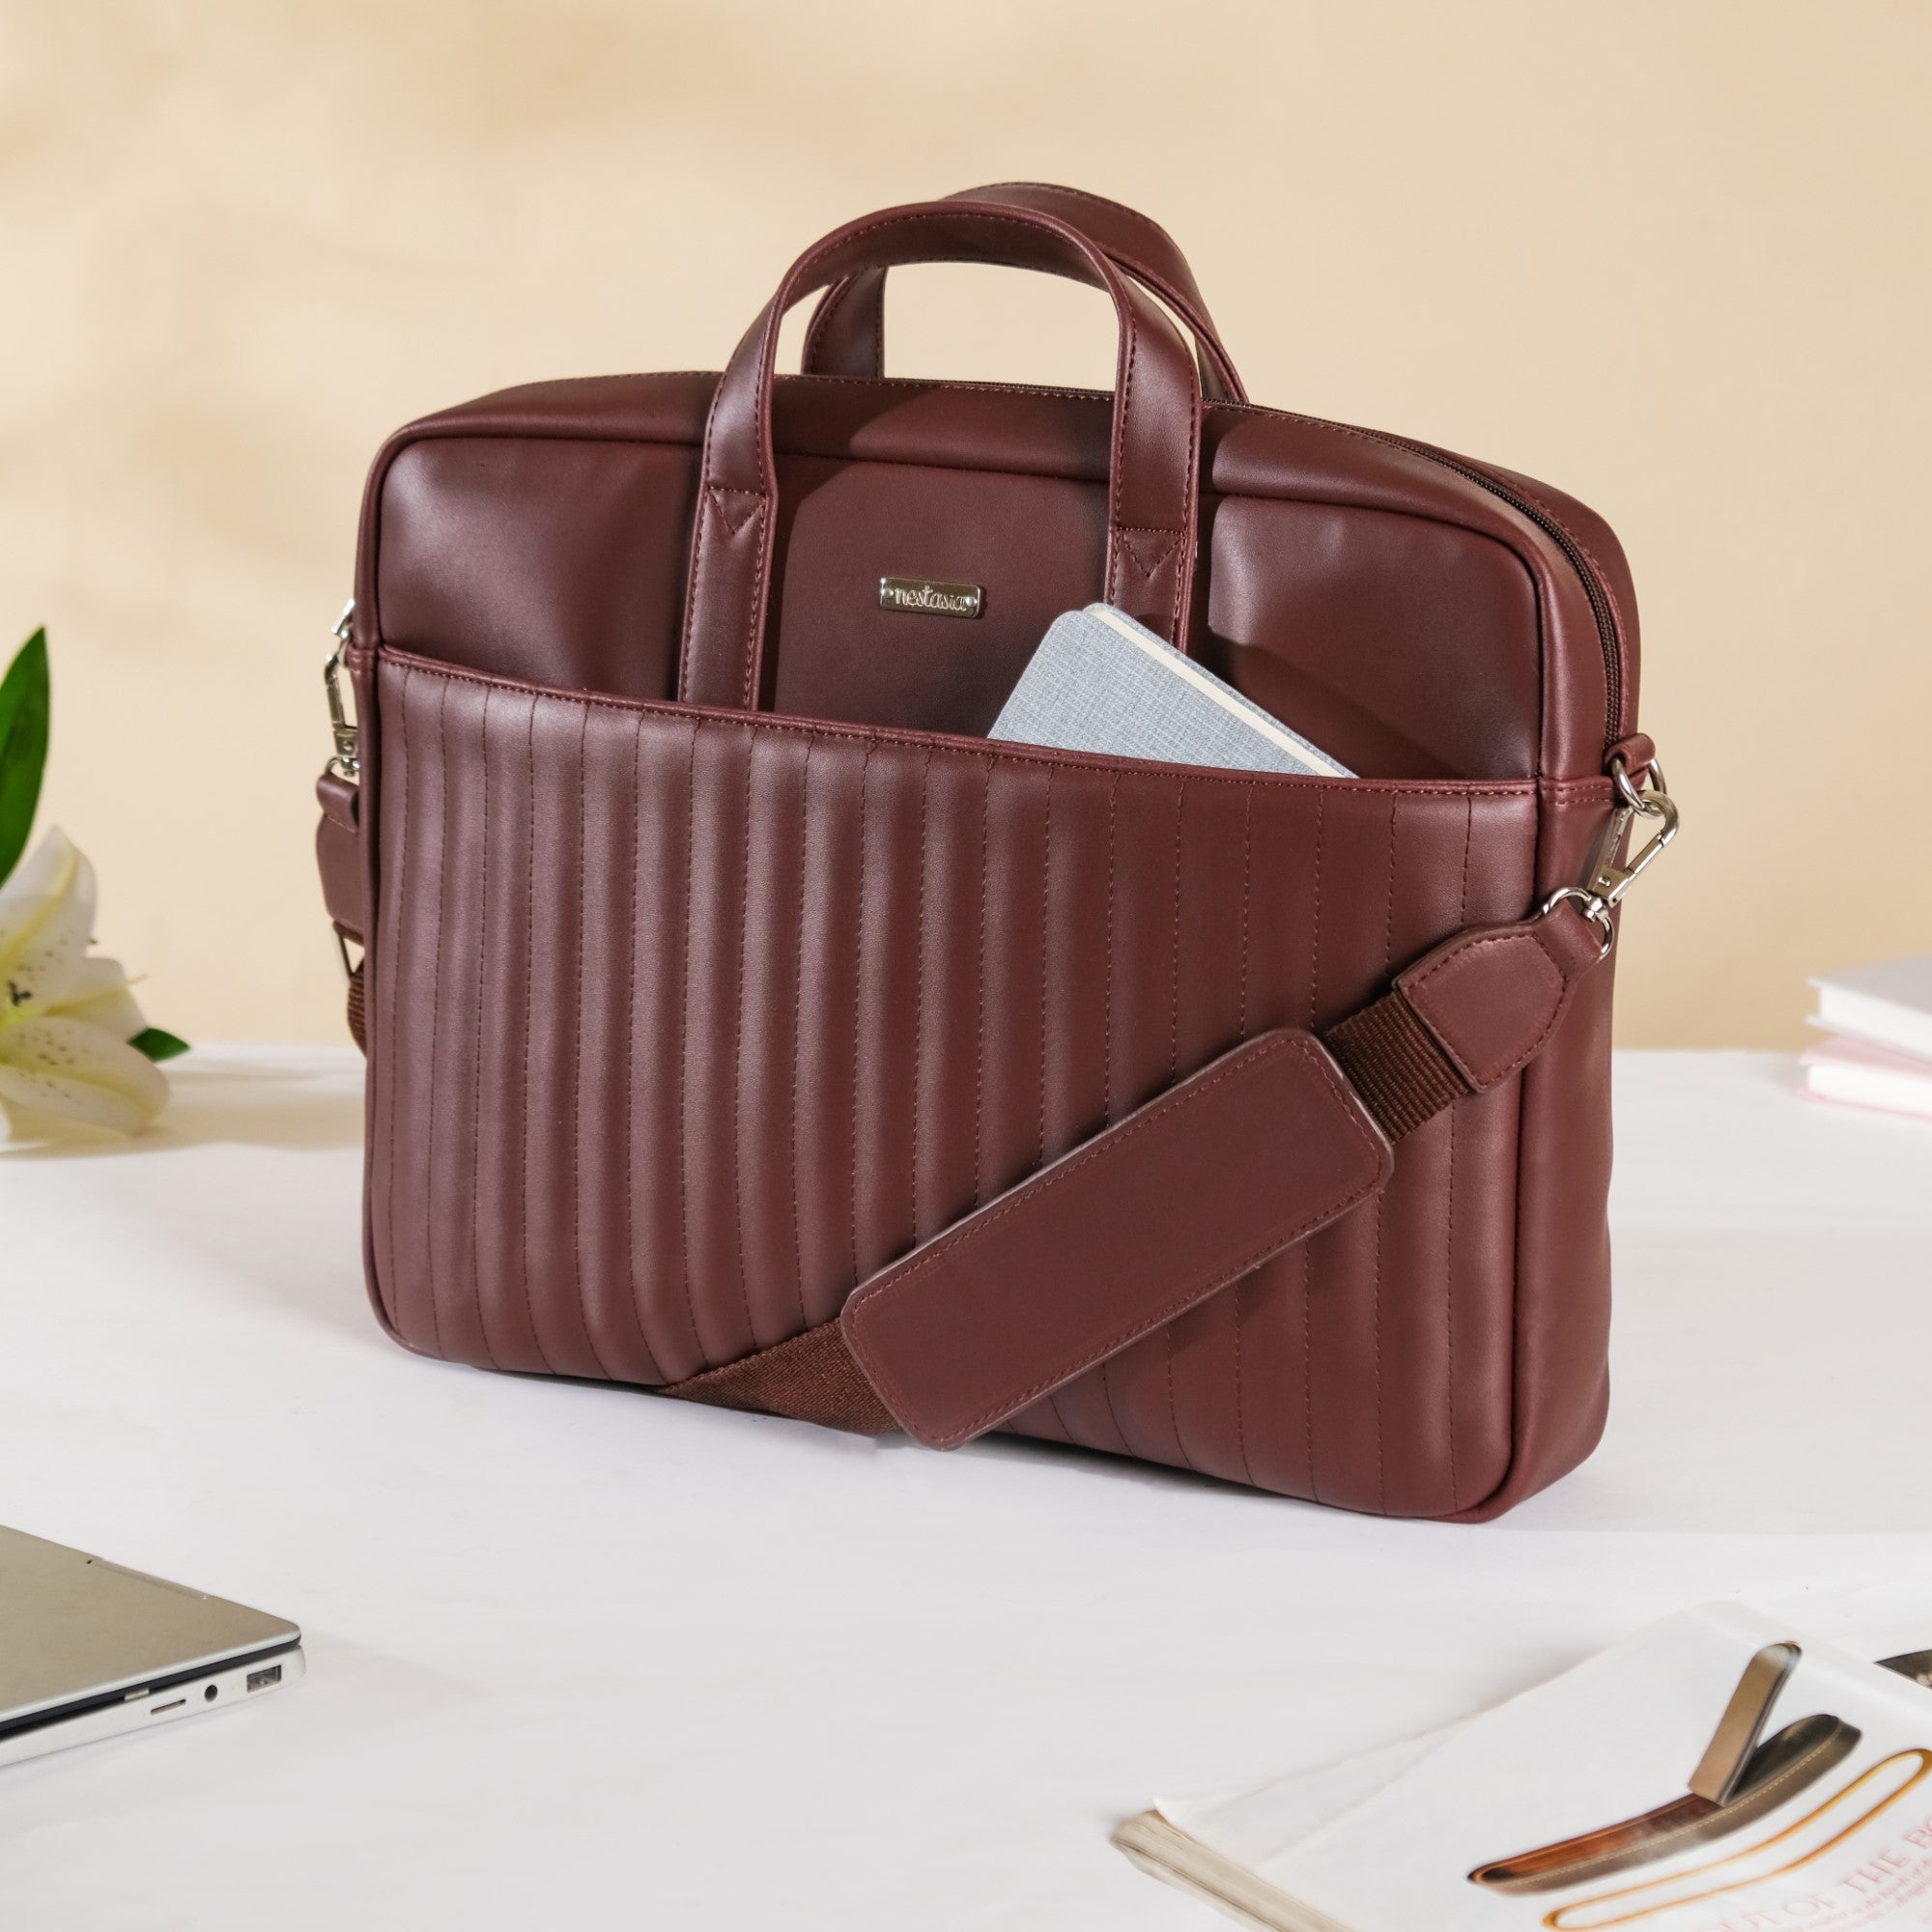 Dome Bag Terrida - Made in Italy, vegetable tan leather, handbag.